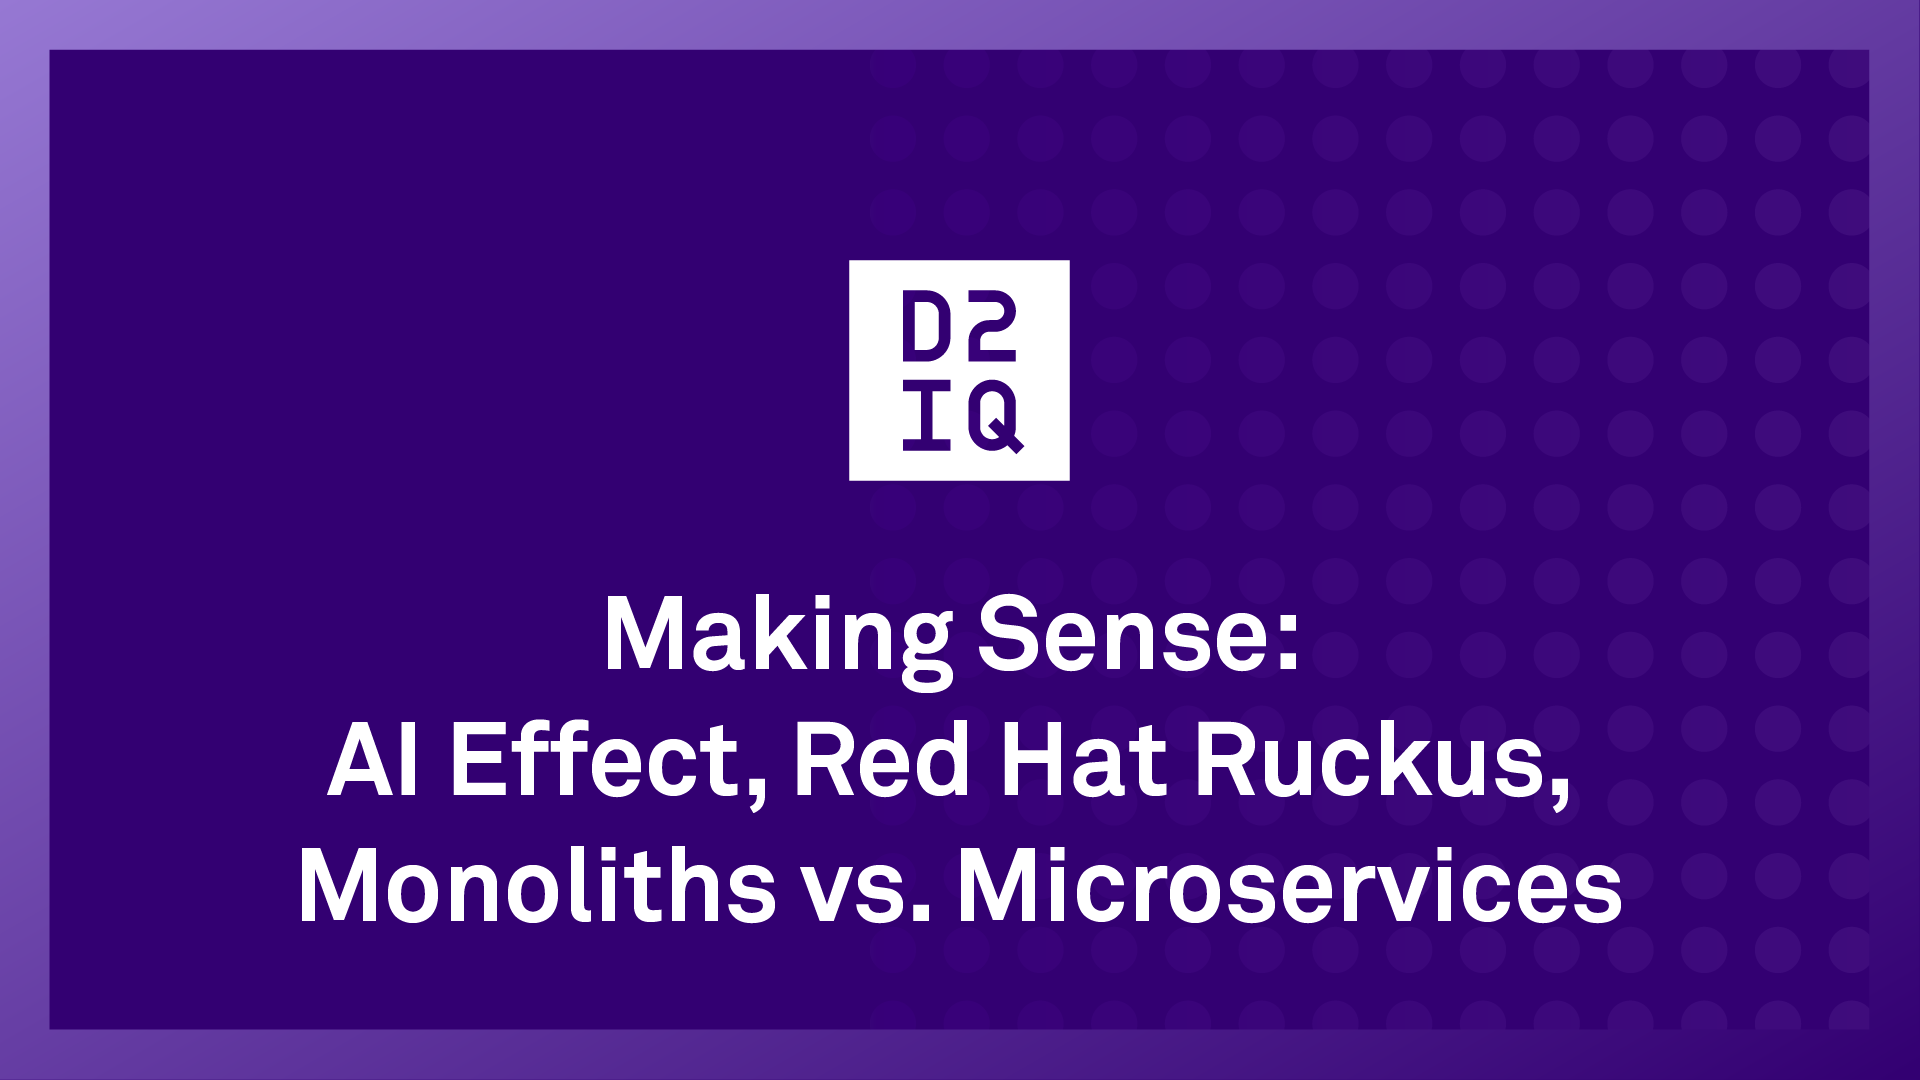 Making Sense: AI Effect, Red Hat Ruckus, Monoliths vs. Microservices